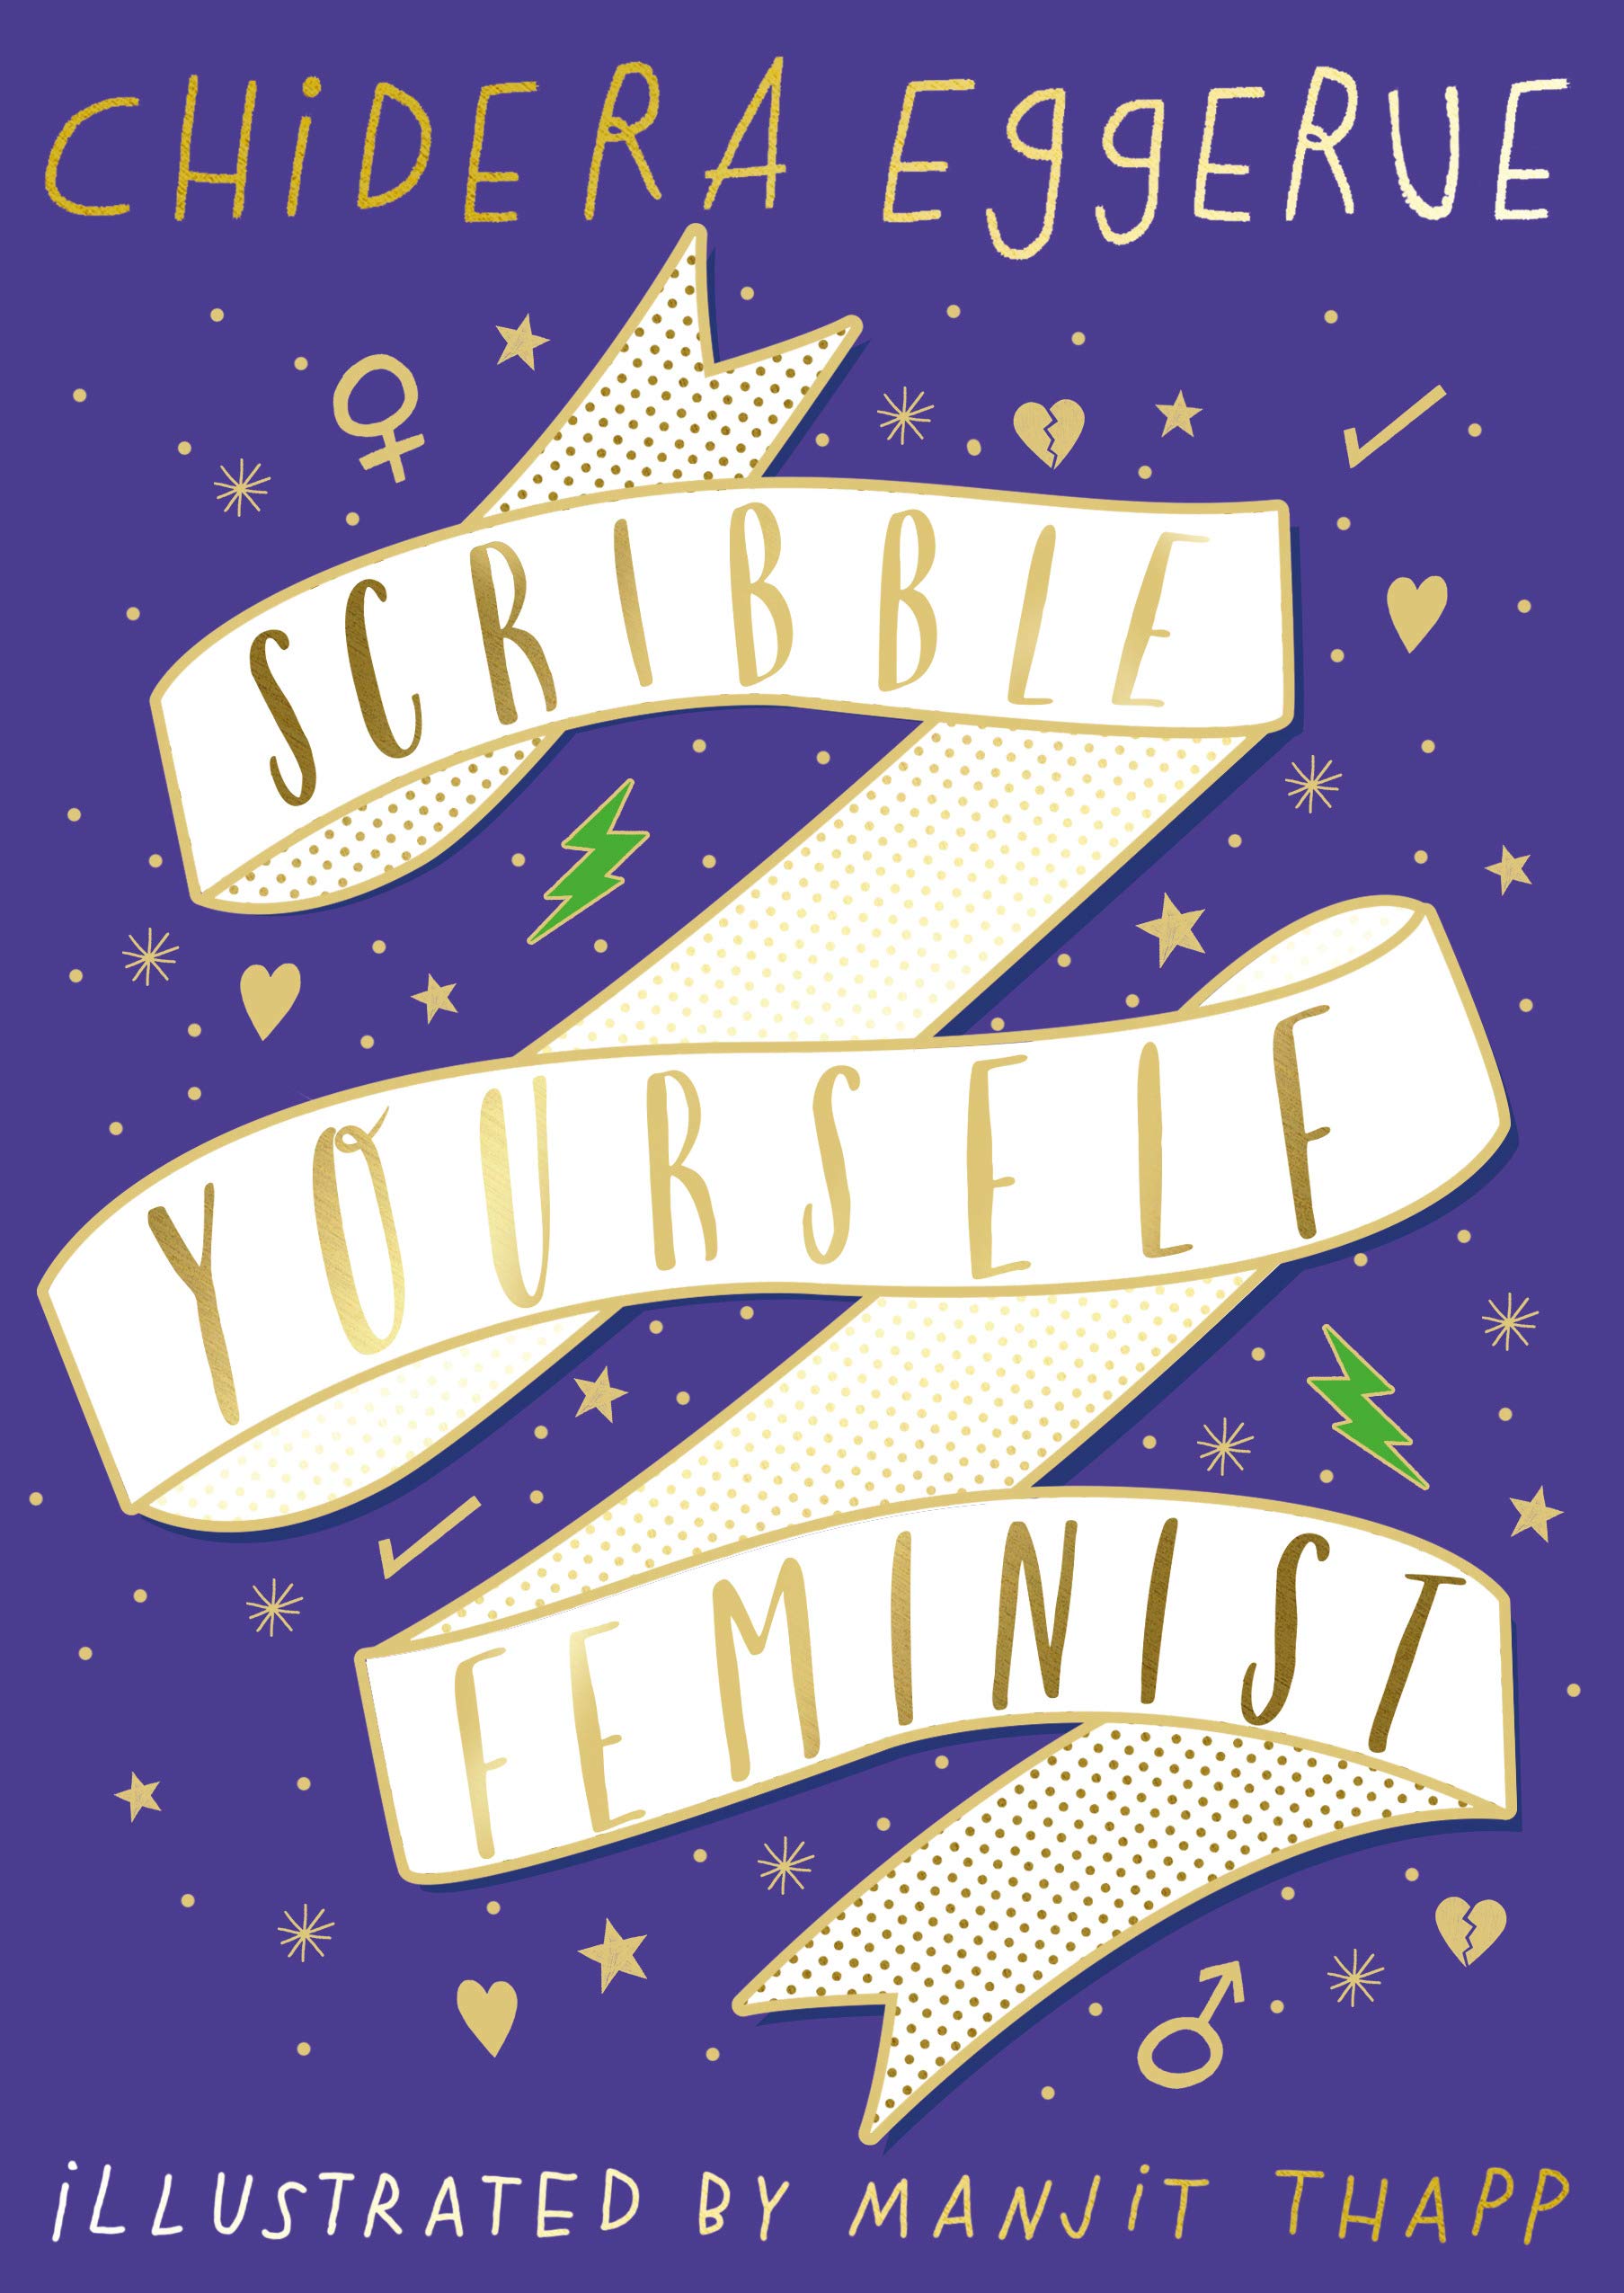 Scribble Yourself Feminist | Chidera Eggerue image12